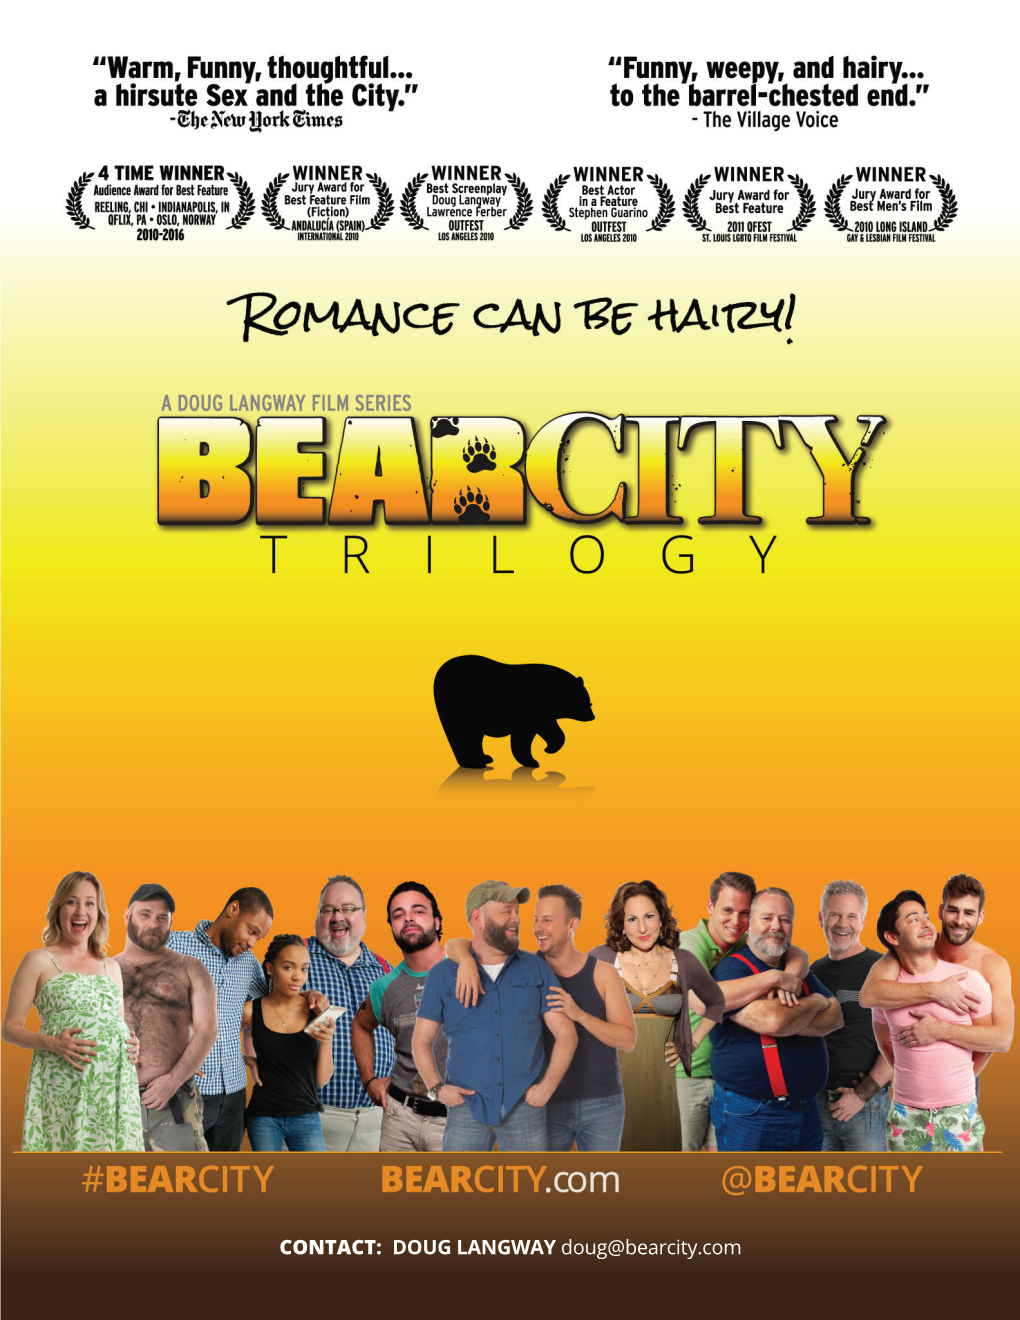 CONTACT: DOUG LANGWAY Doug@Bearcity.Com “A Barrel of “Fun!” -Michael Musto, the Village Voice on Bearcity